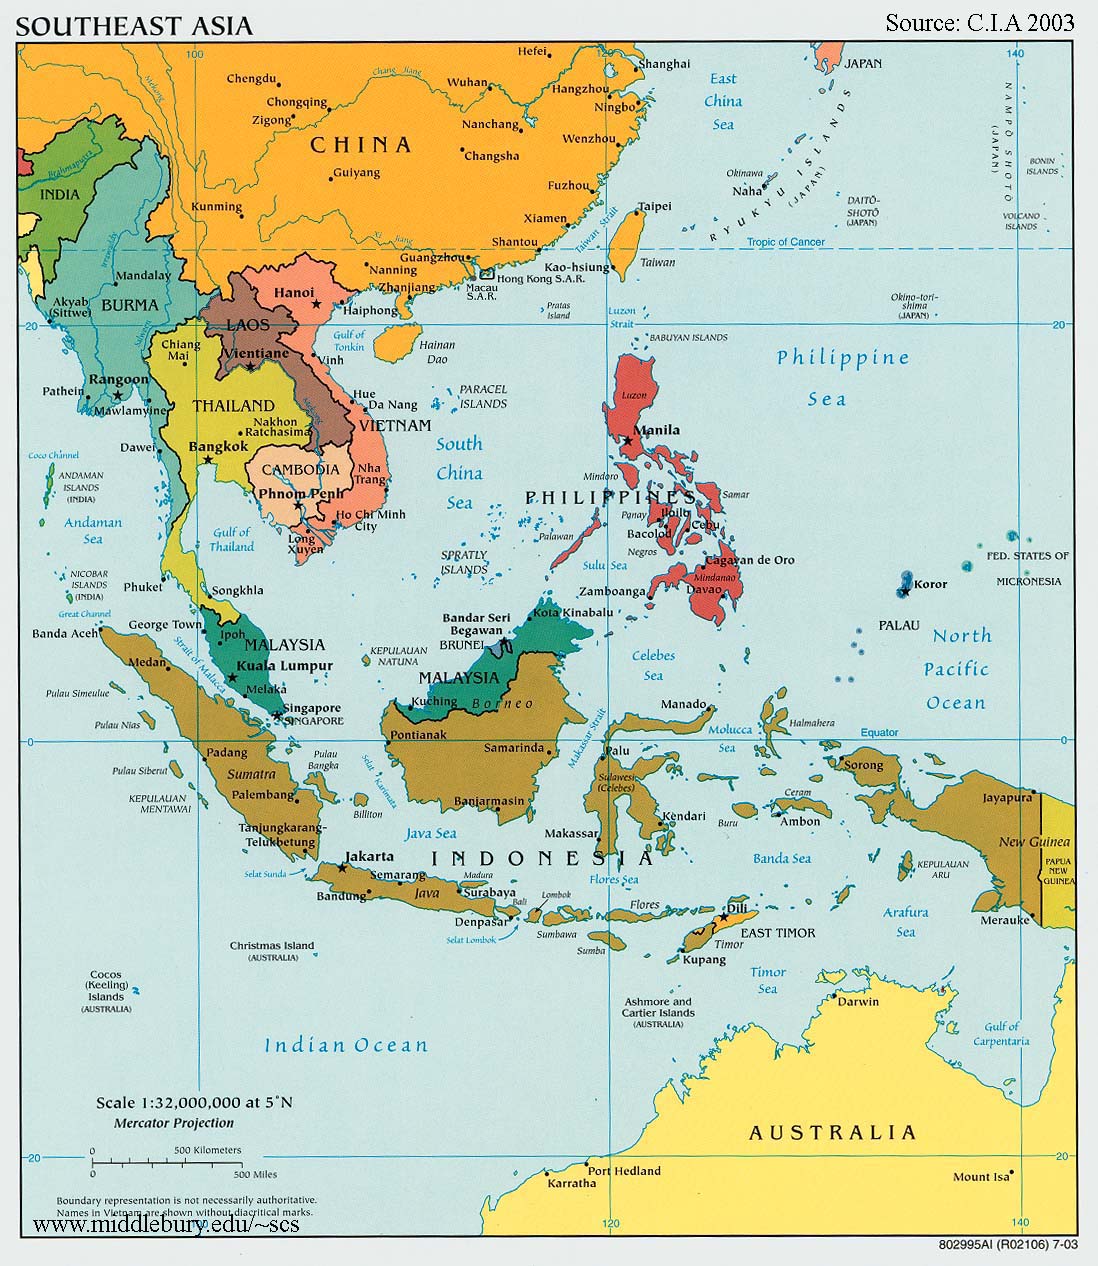 Southeast-Asia-Political-Map-CIA-2003.jpg